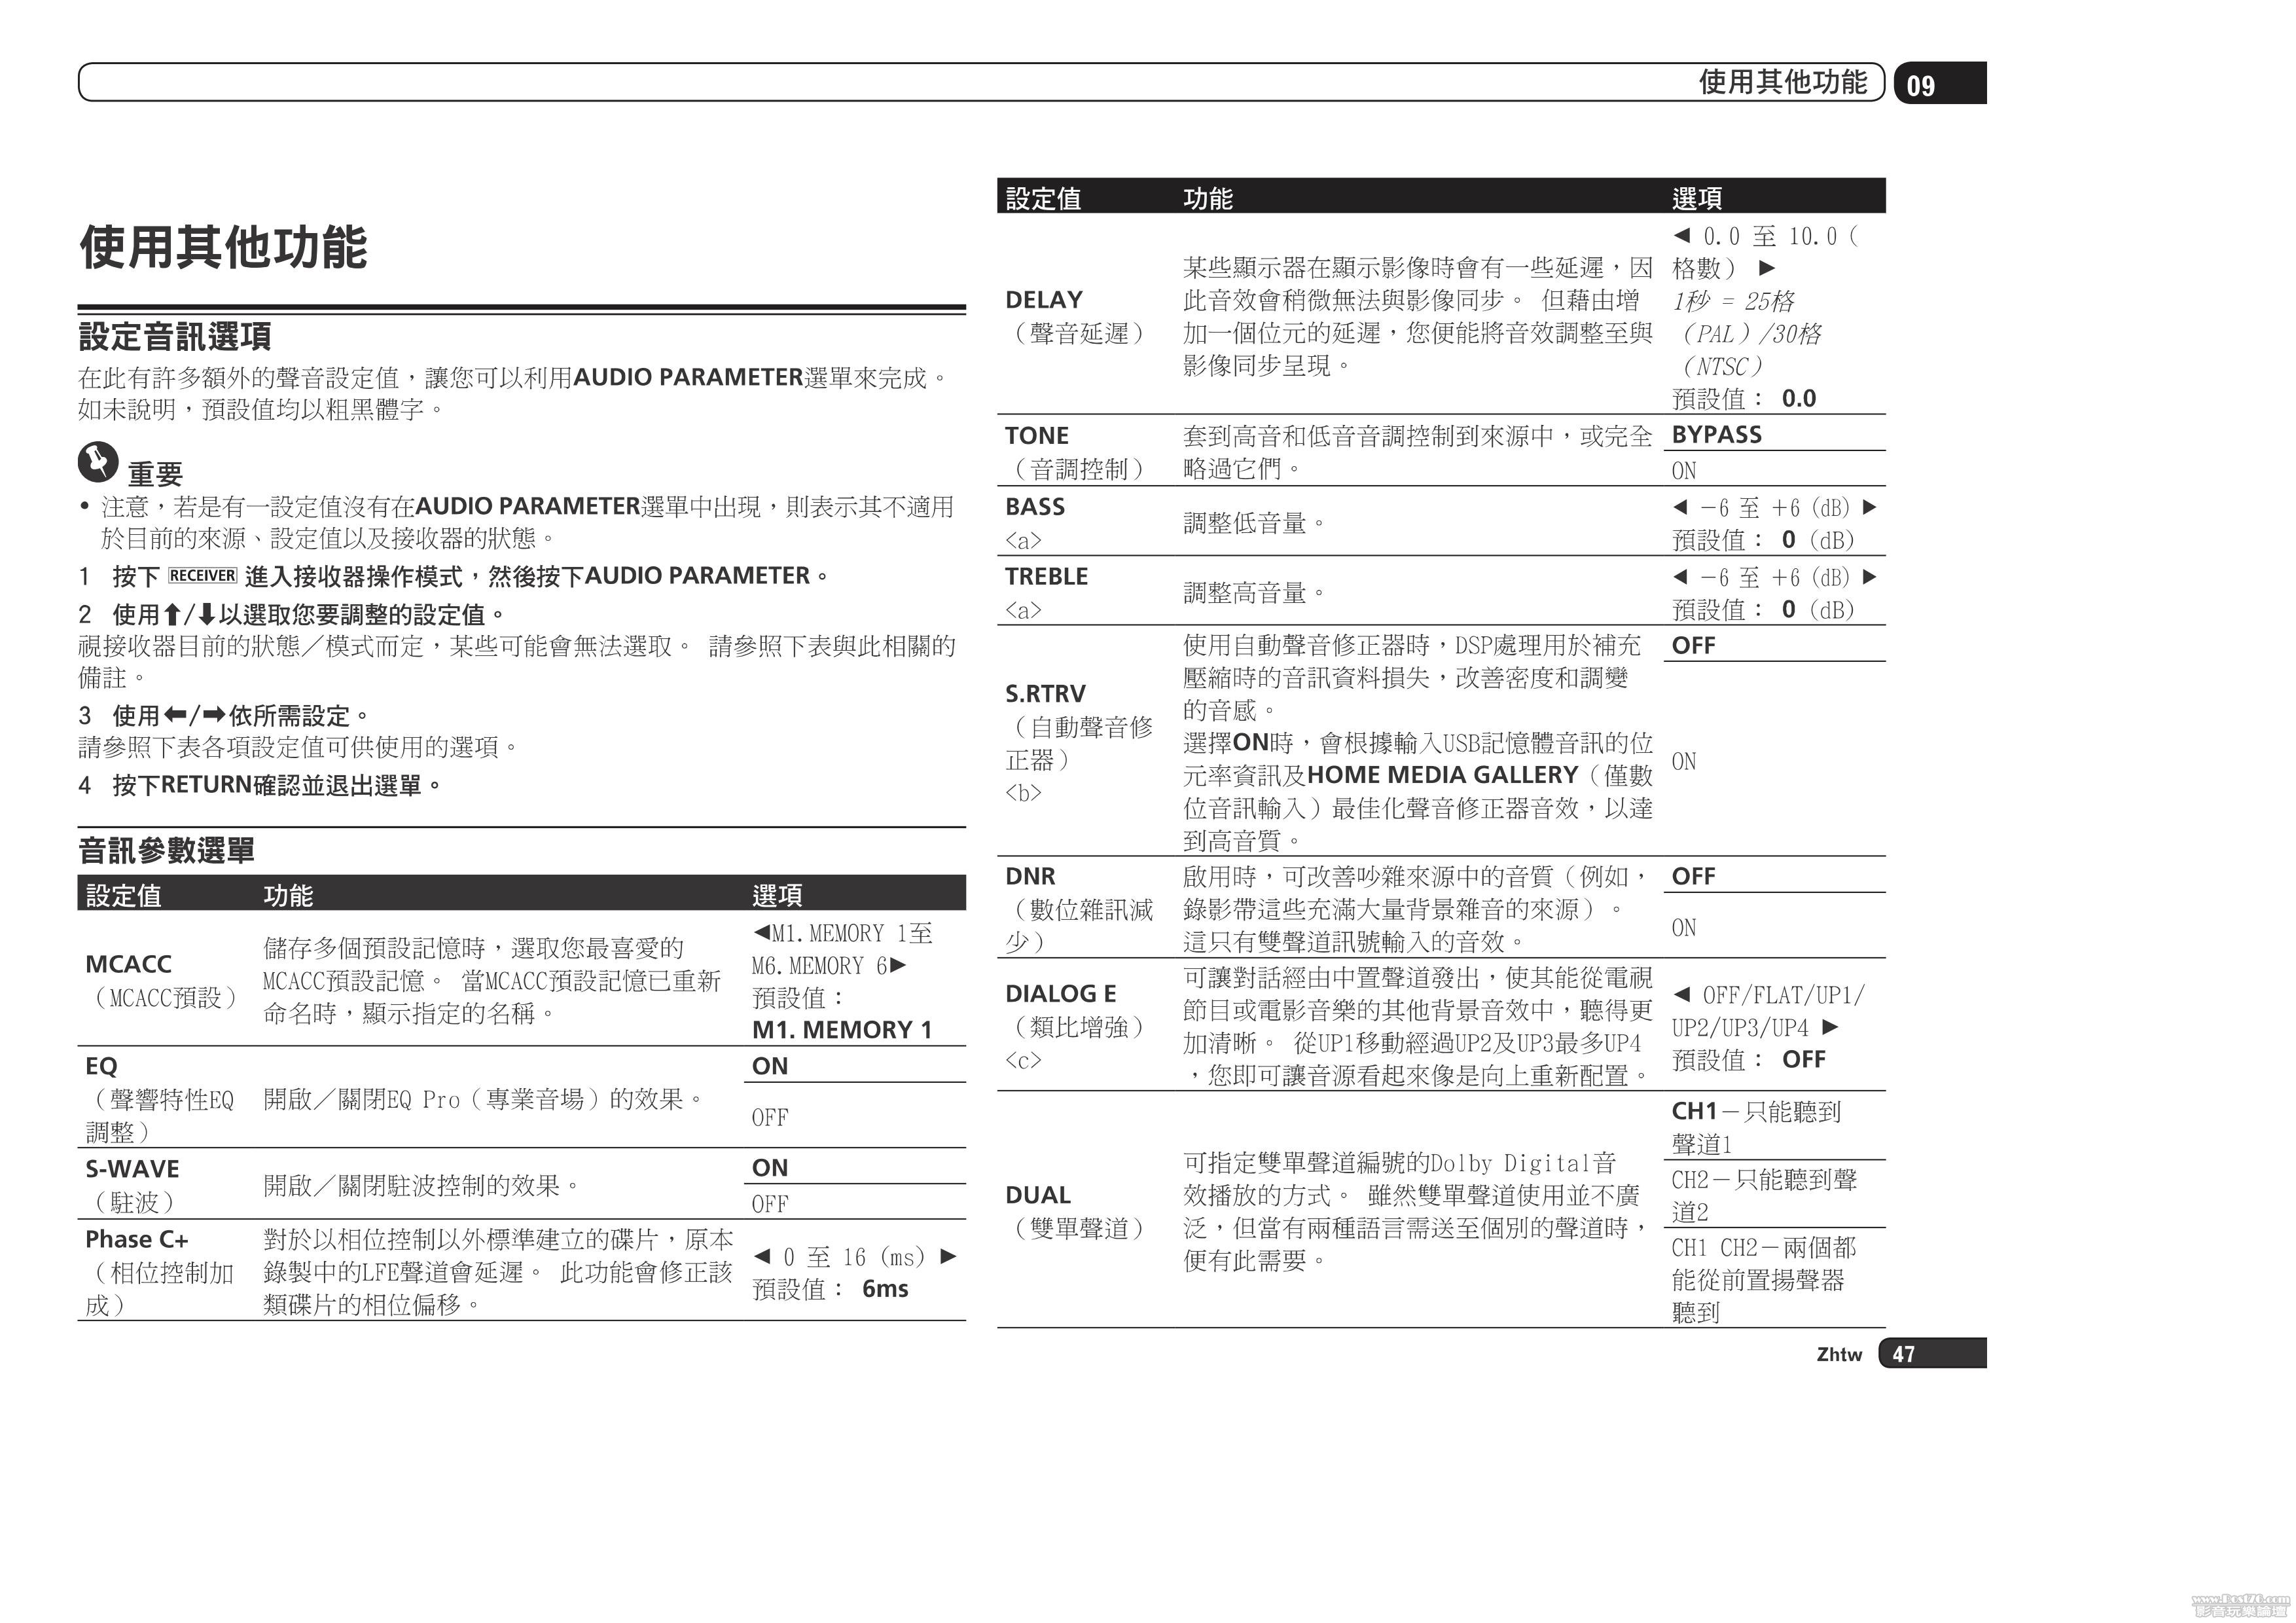 VSX-LX55 Chinese User Manual4748_01.jpg